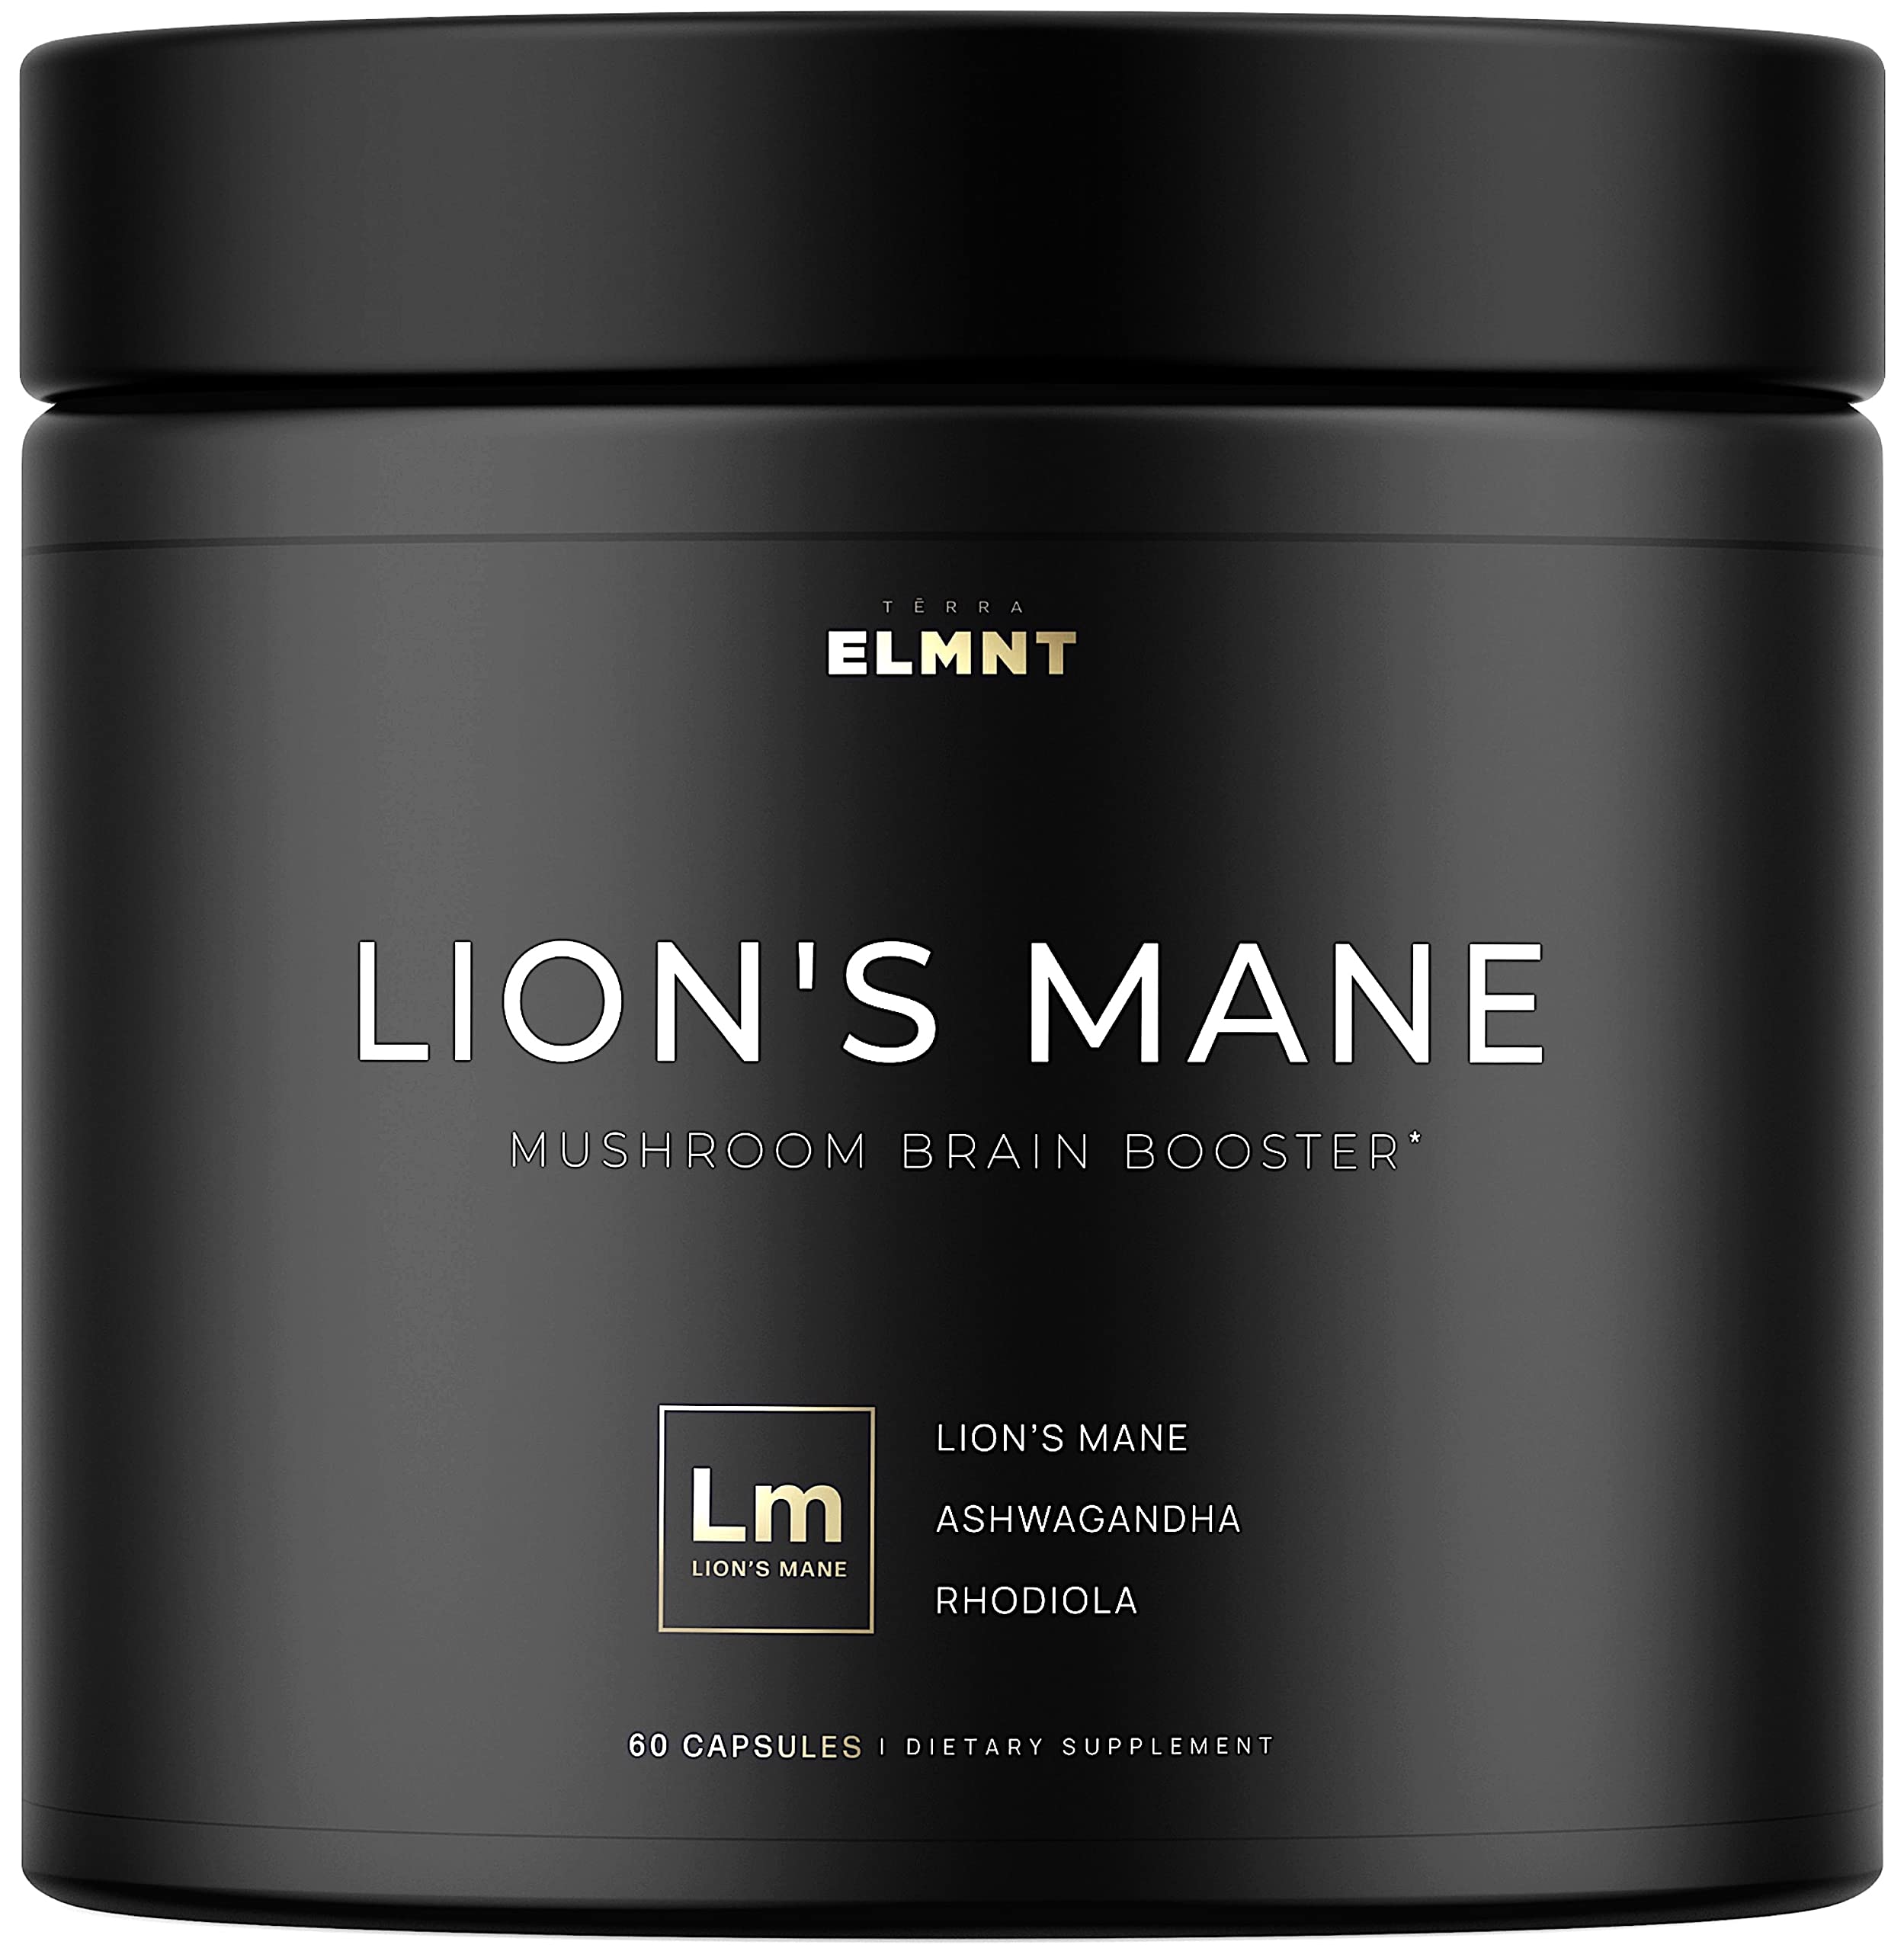 ELMNT 20,000mg 16x Strength Lions Mane Super Nootropic + Adaptogens Brain Supplement - Highest Potency Lion's Mane Extract 50% Polysaccharides w. Ashwagandha & Rhodiola for Focus, Energy, Memory